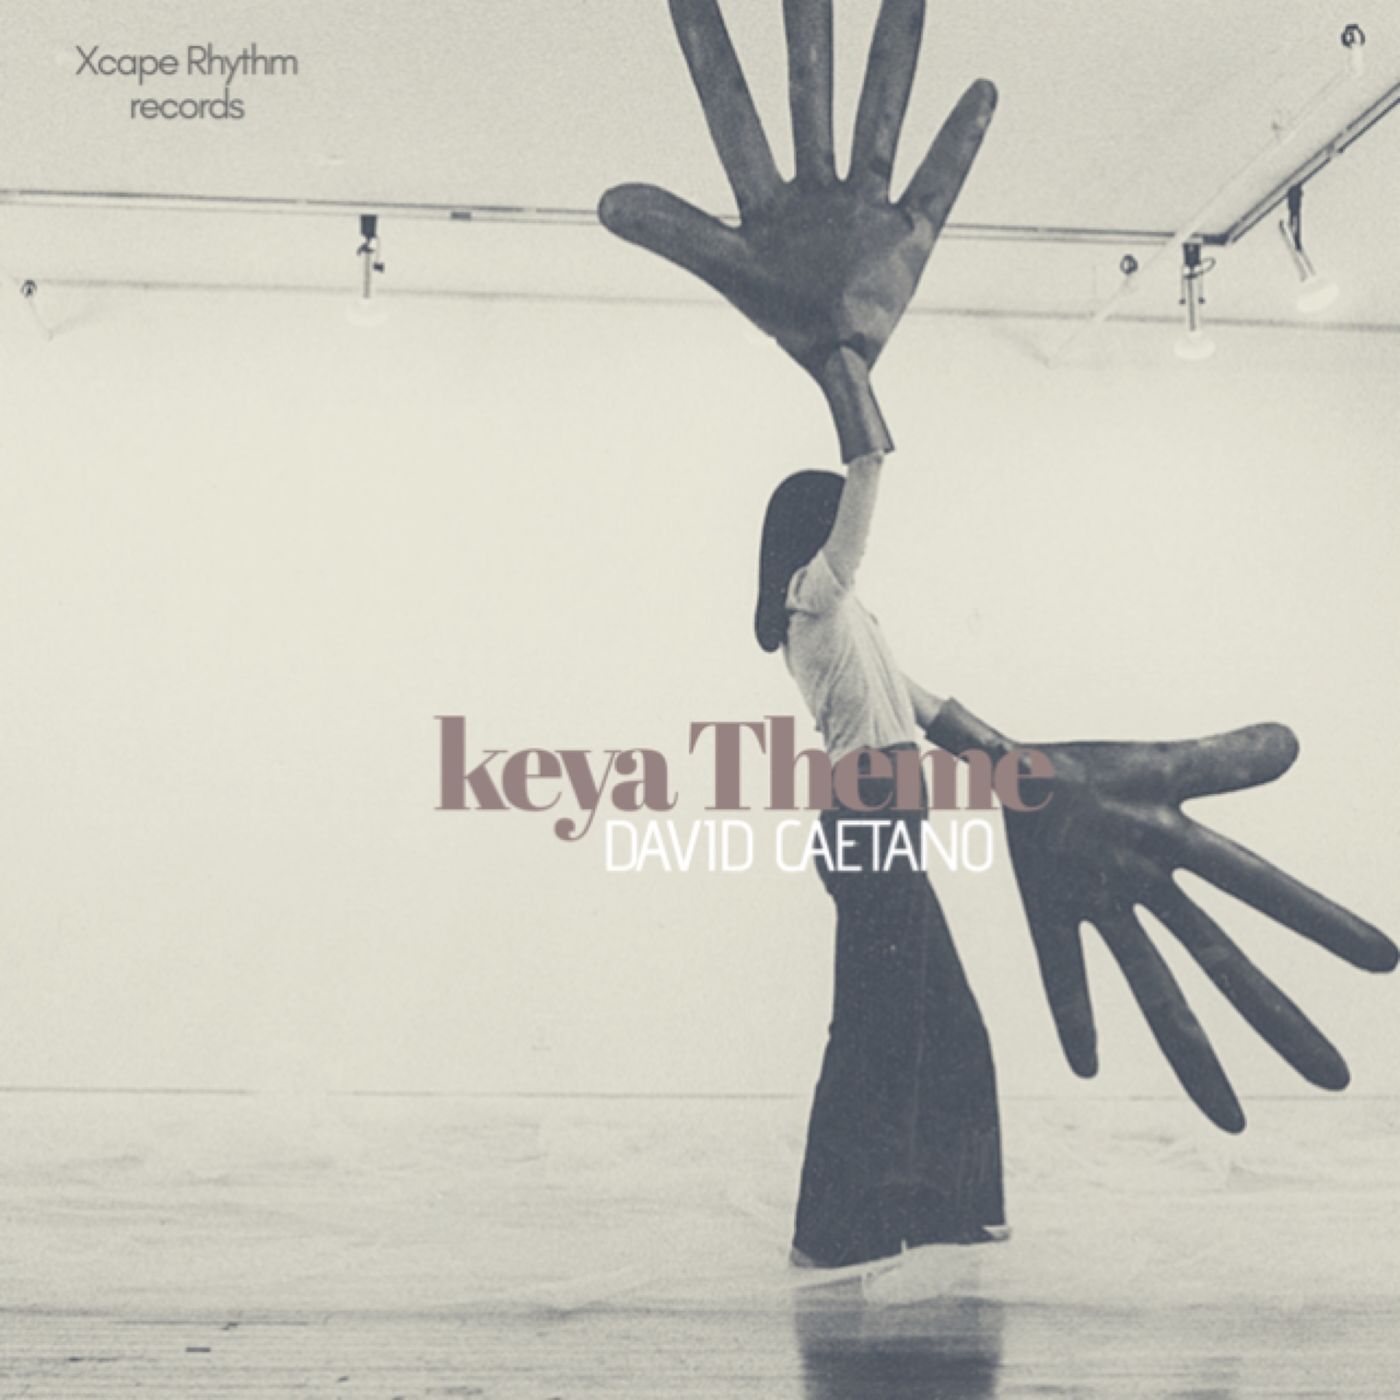 David Caetano - Keya Theme / Xcape Rhythm Records